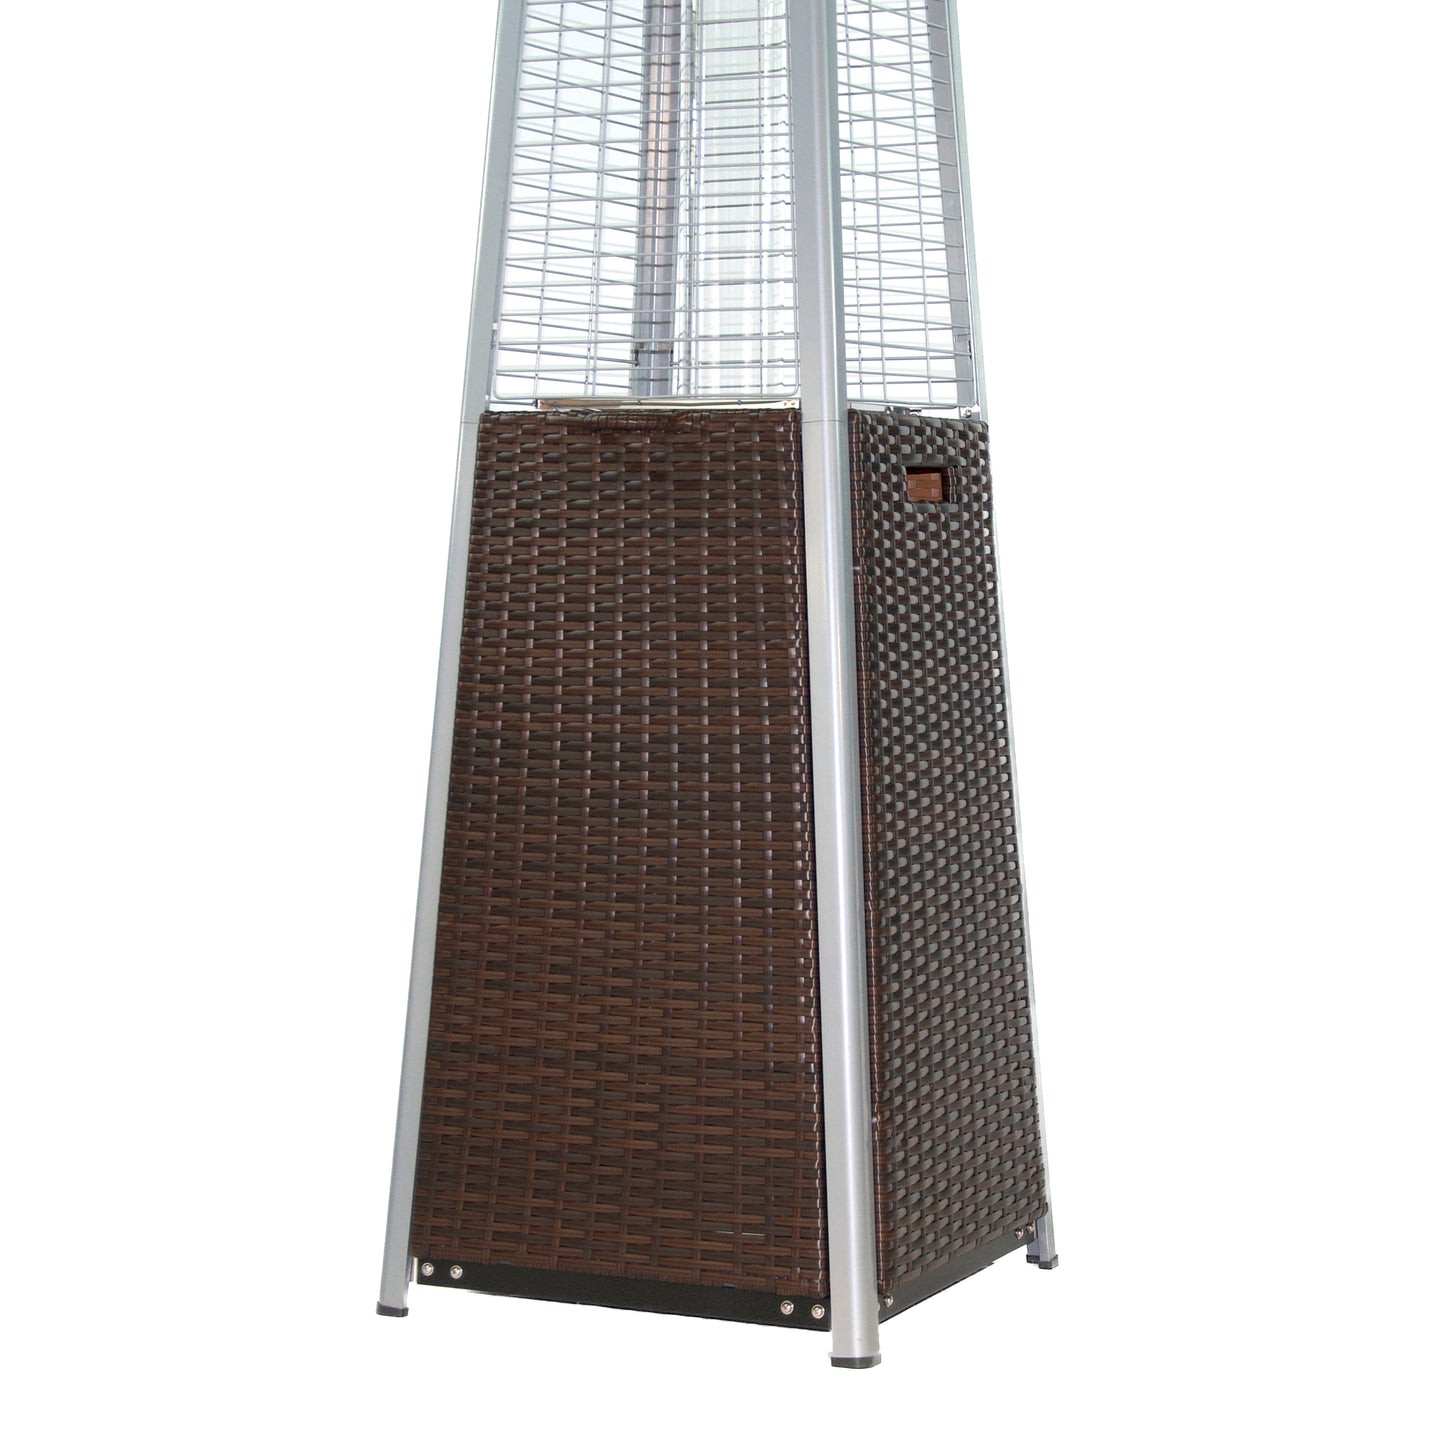 89" Tower Flame Propane Patio Heater - Dark Brown Wicker